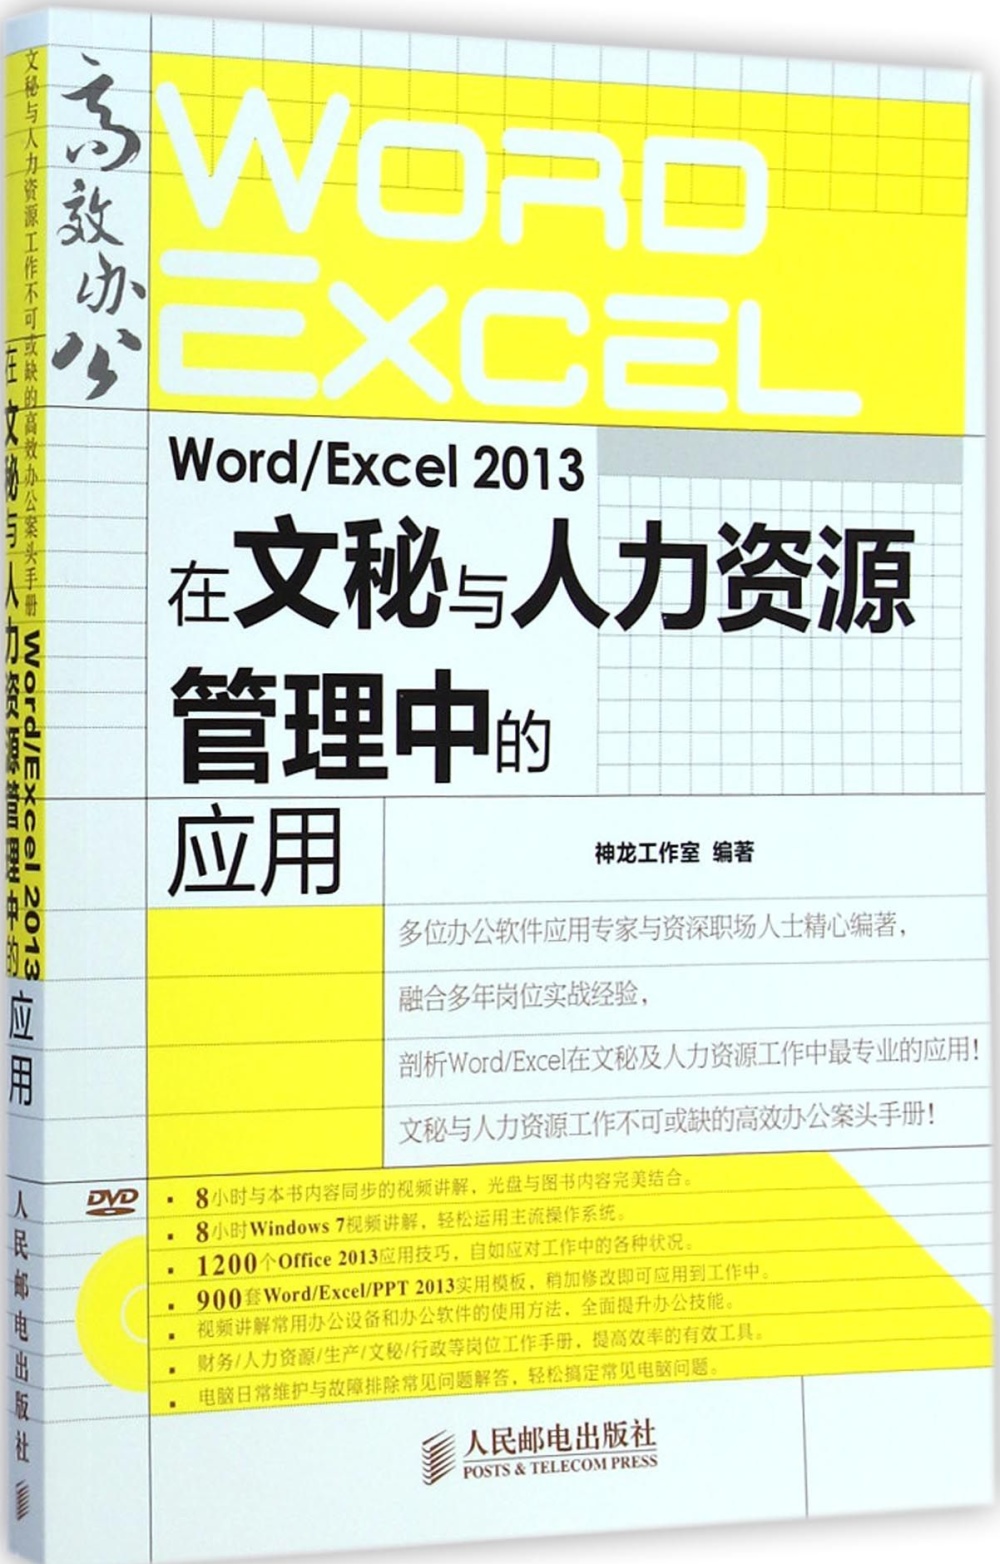 Word/Excel 2013在文秘與人力資源管理中的應用